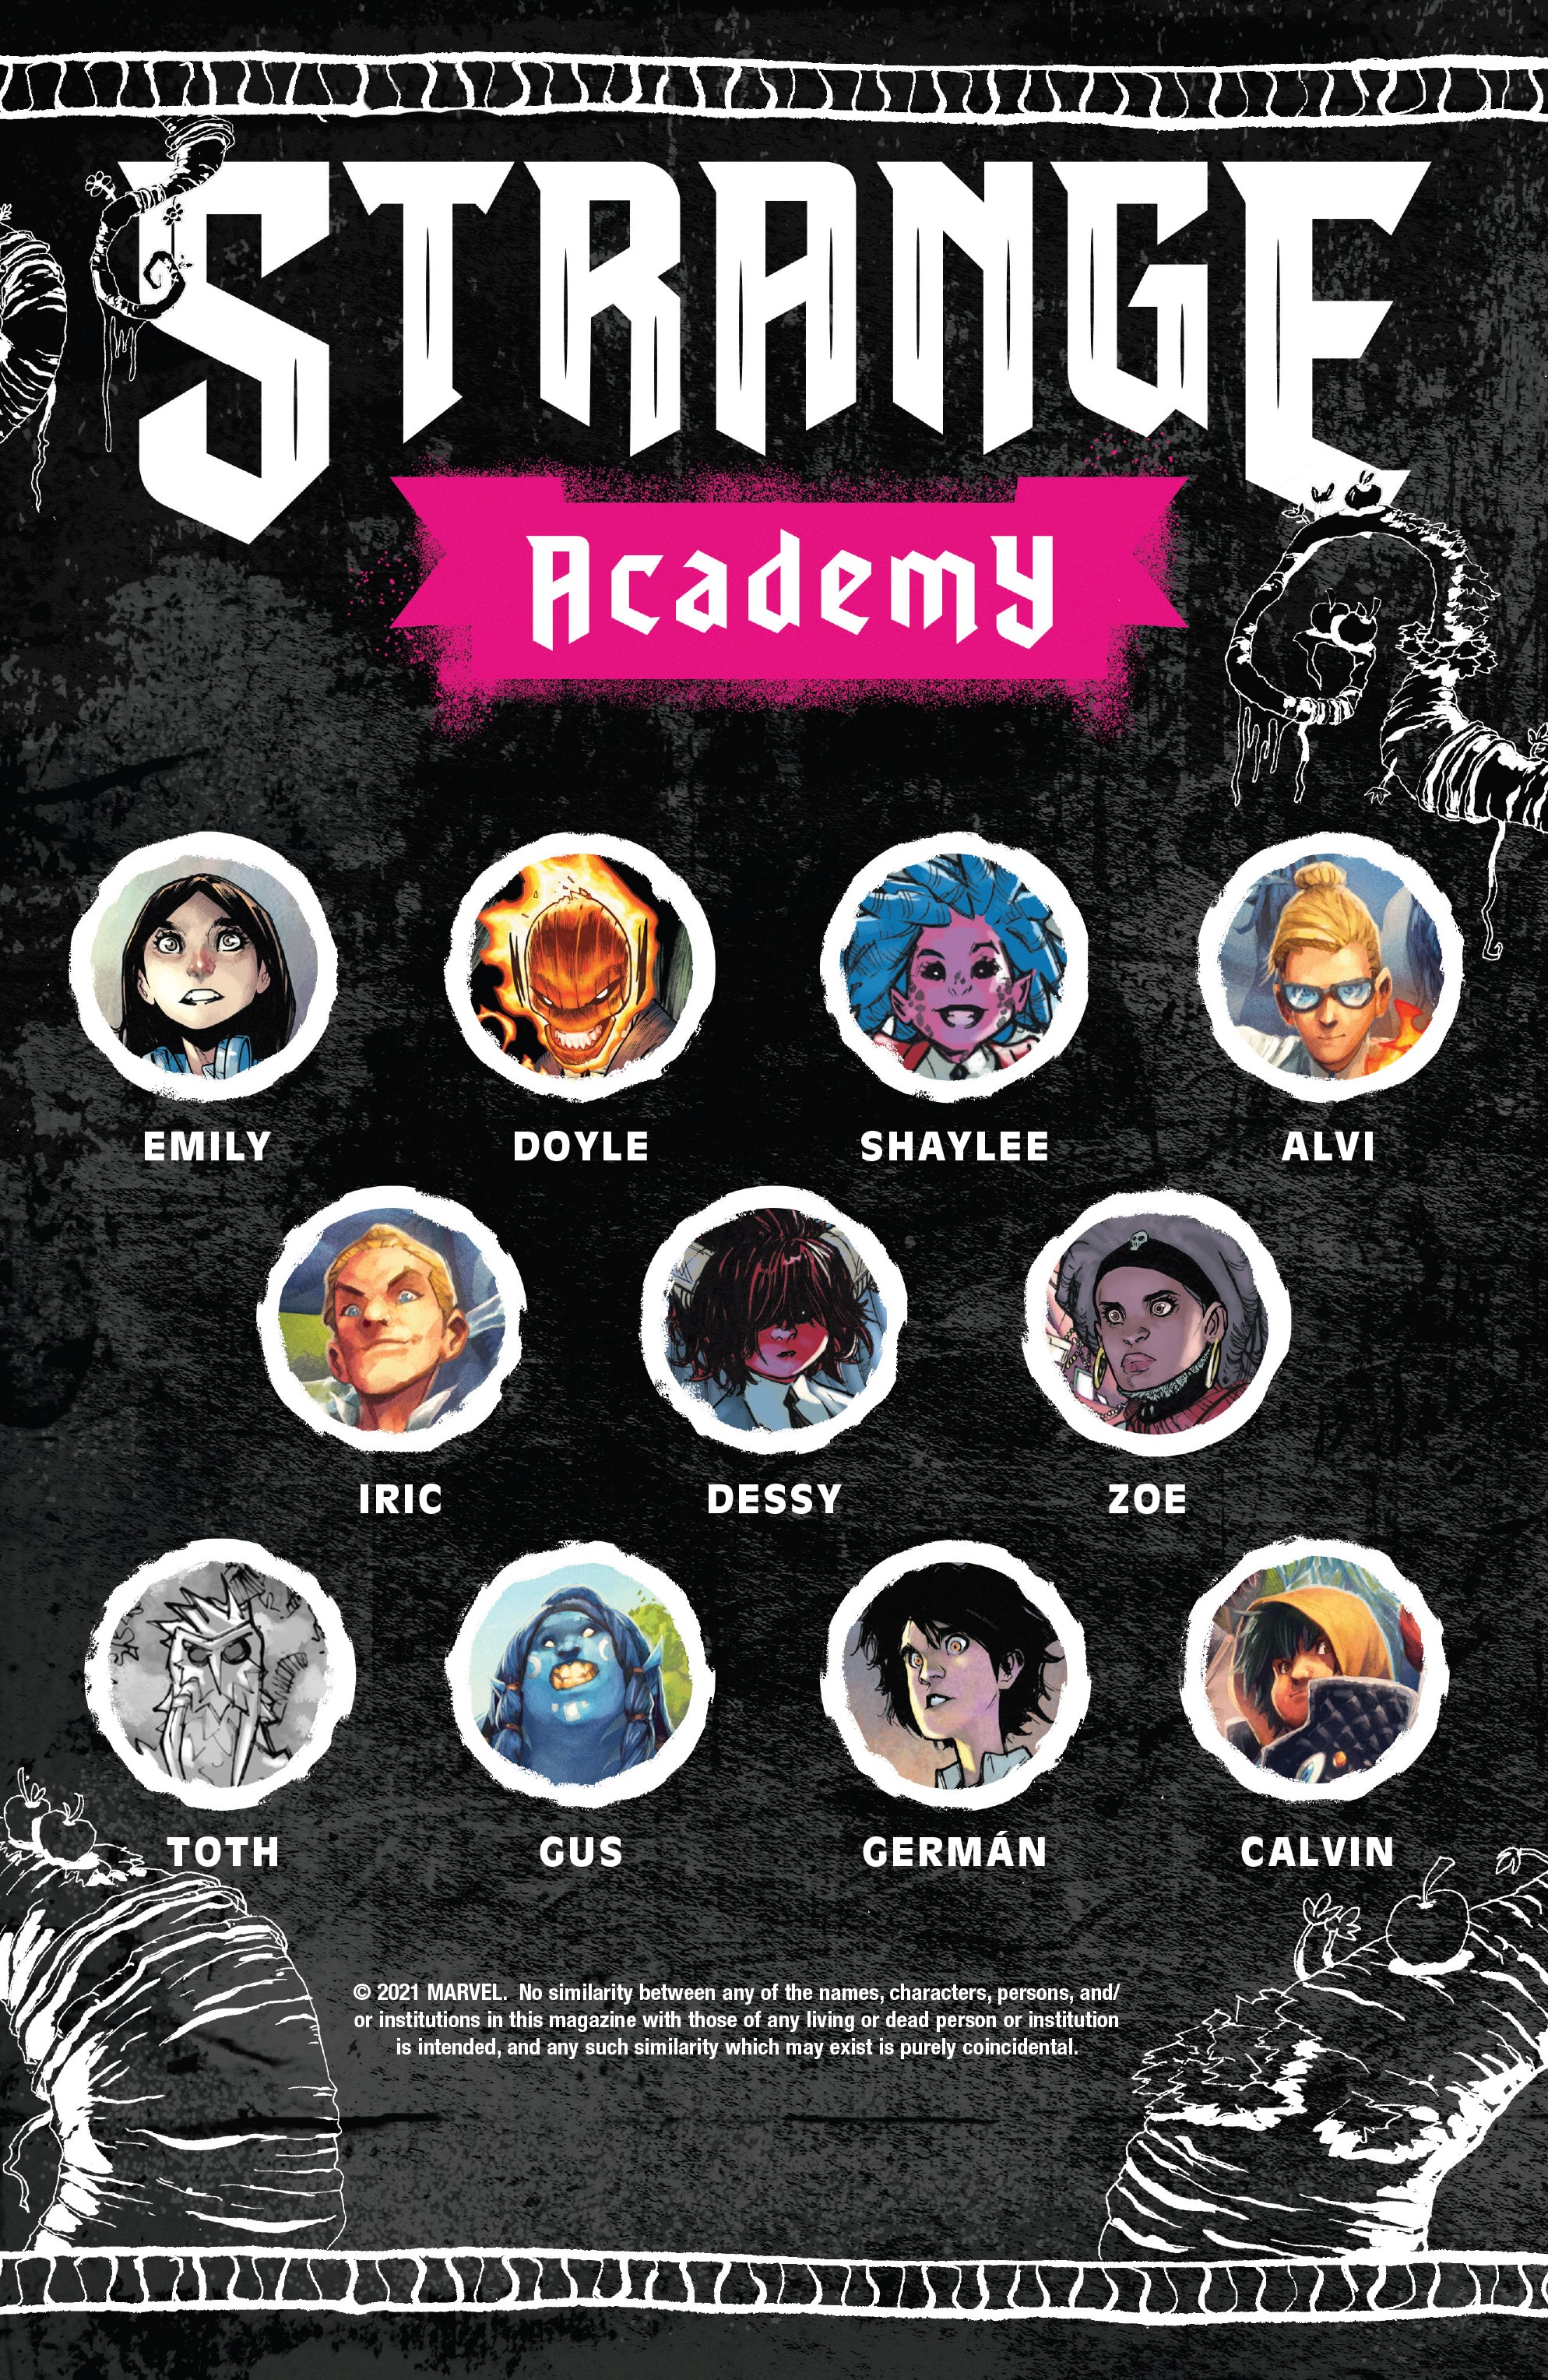 Read online Strange Academy comic -  Issue #11 - 6